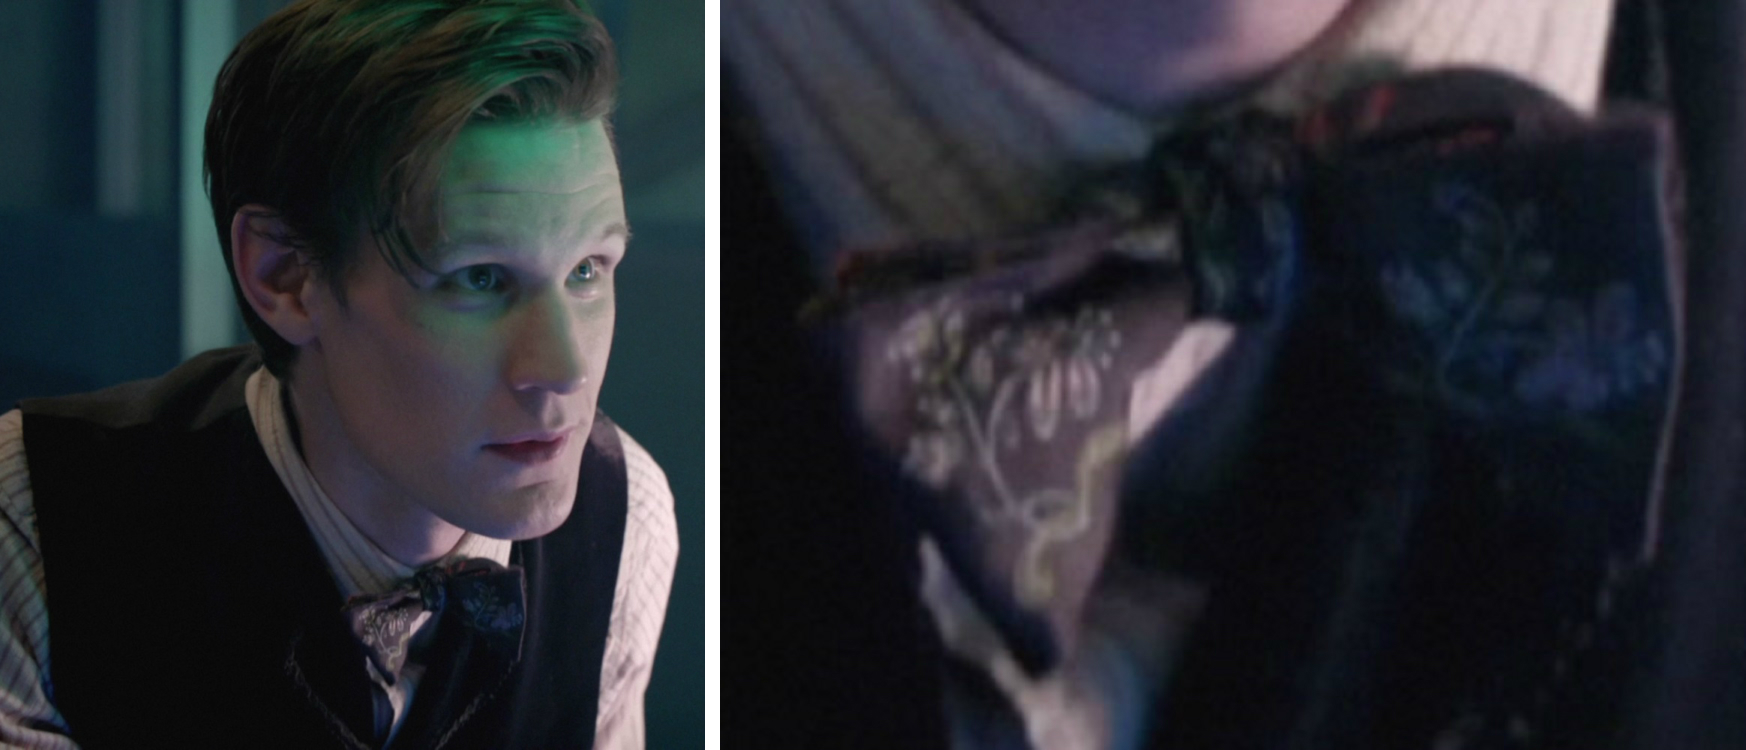 11th Doctor "Snowmen" costume analysis - bow tie